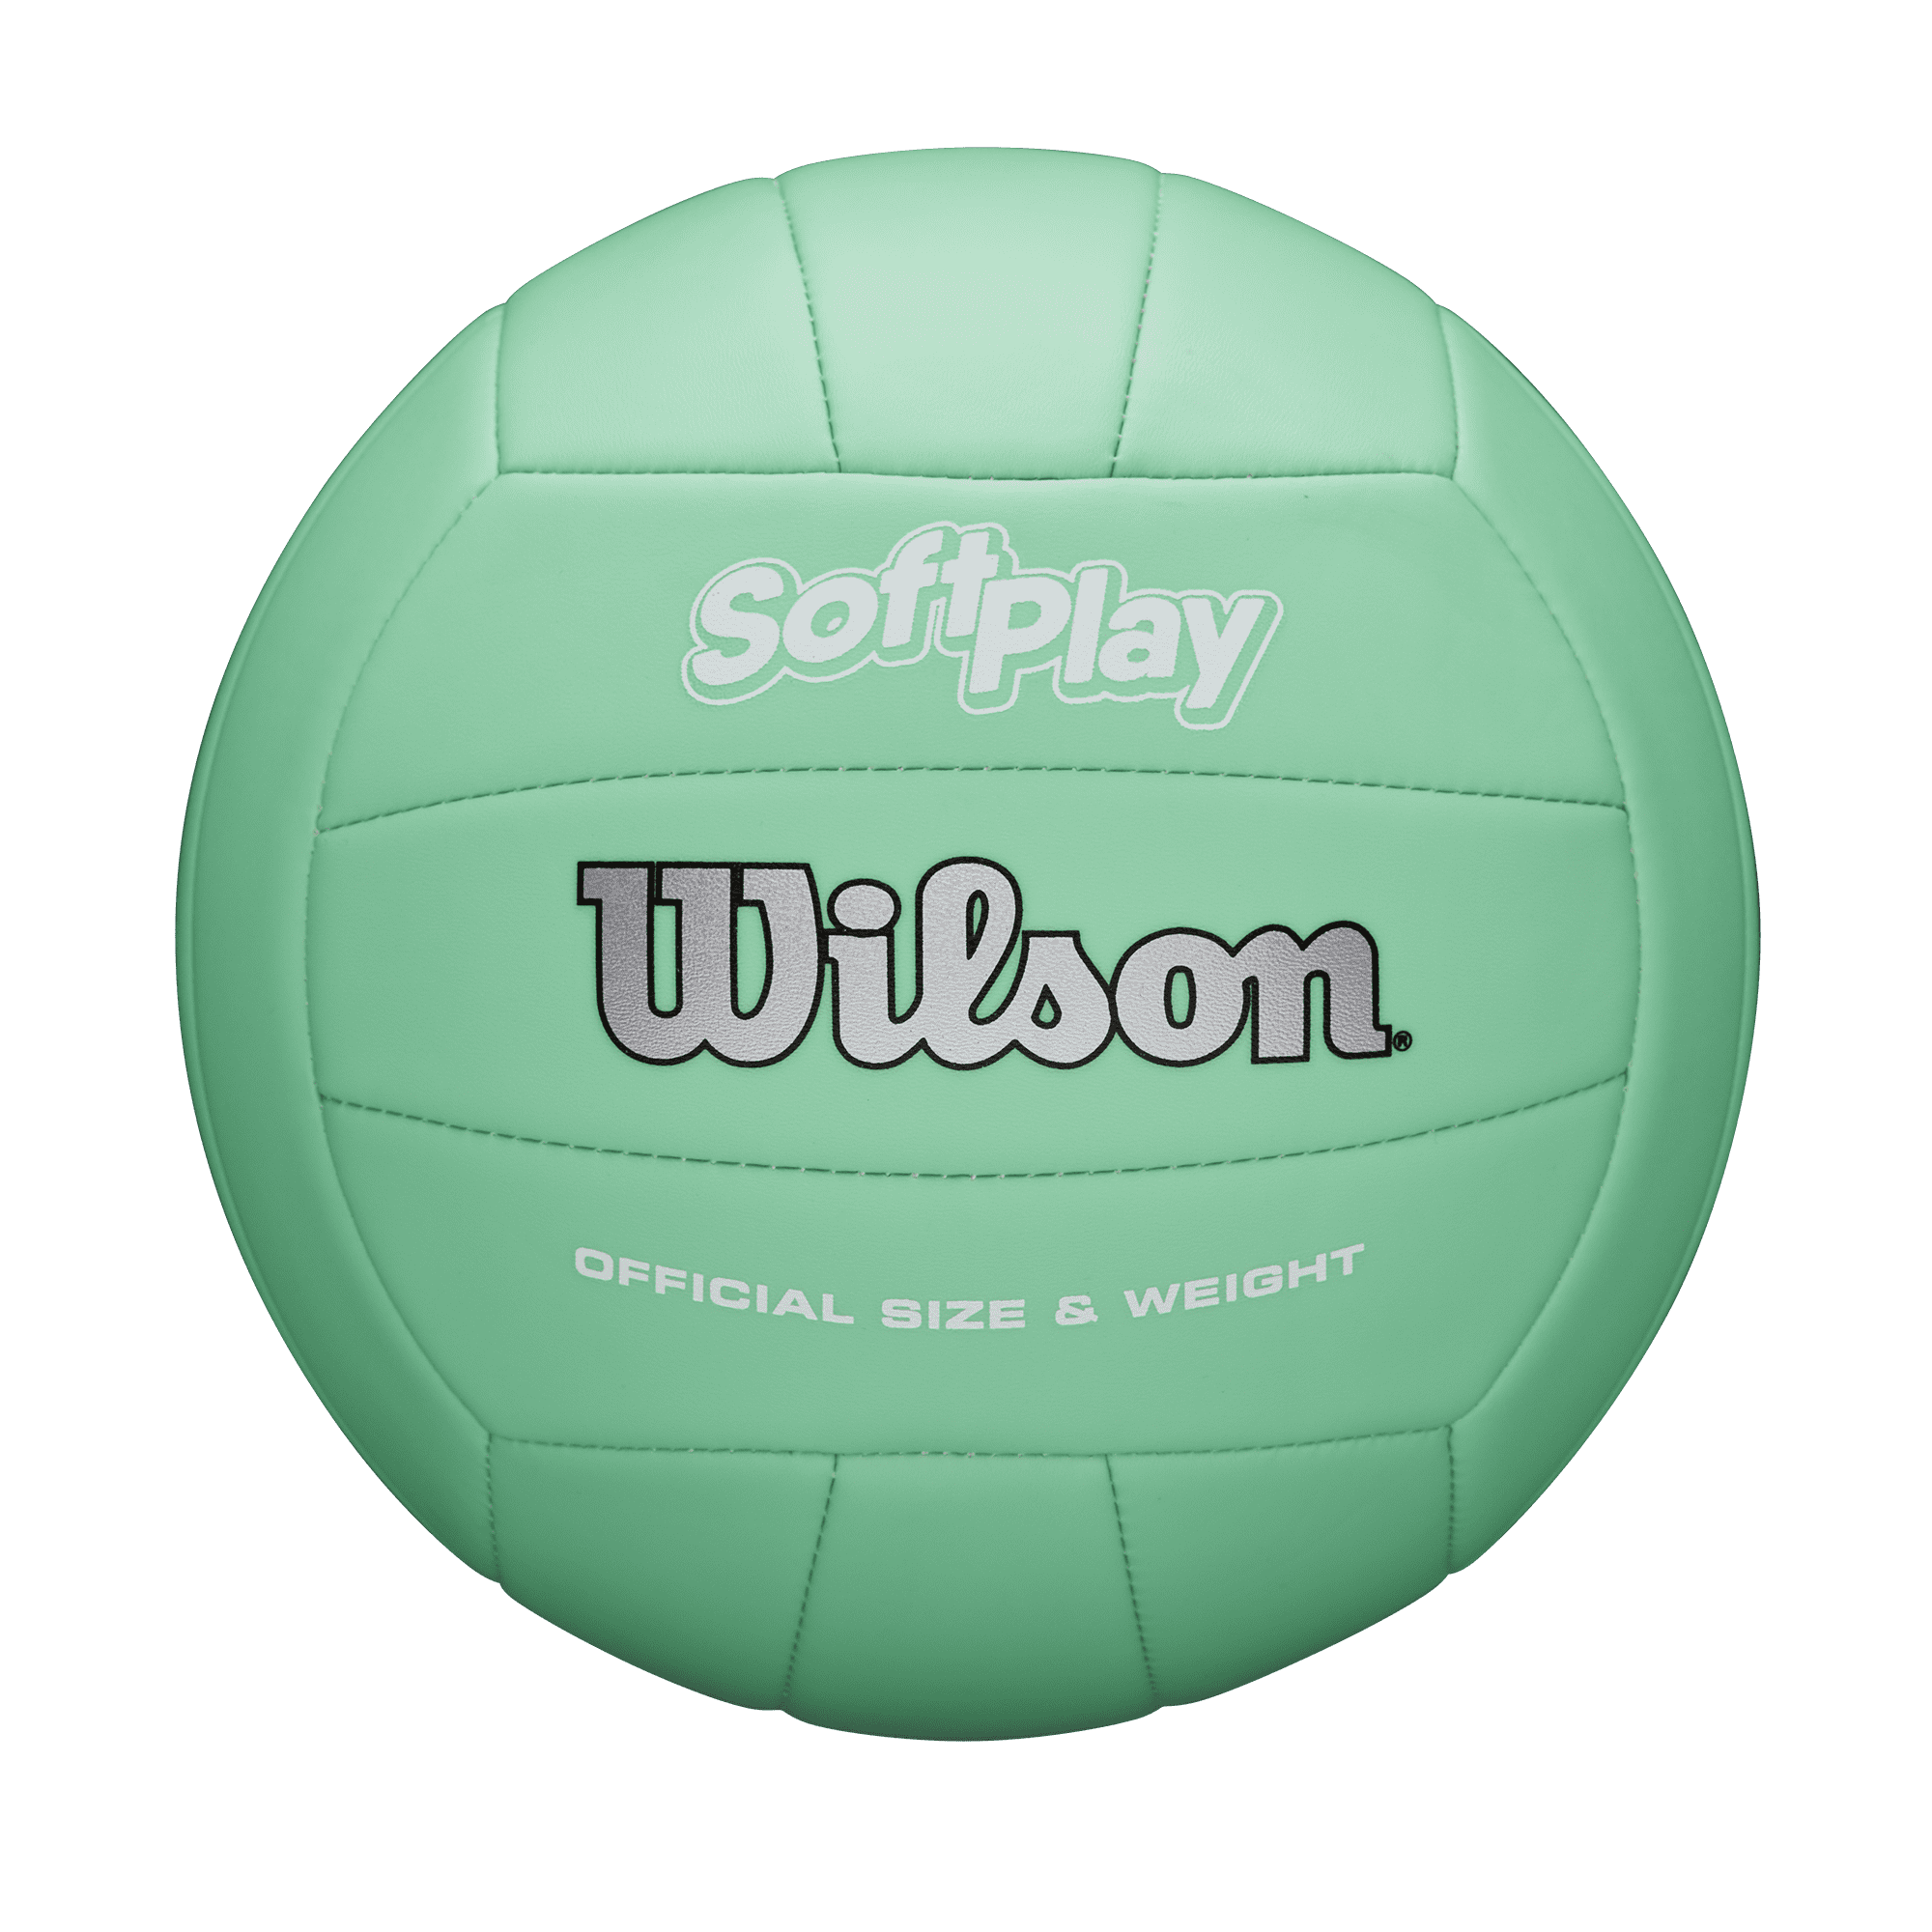 Wilson Outdoor Soft Play Volleyball Pink Ball Sport Ball Official Size Weight 